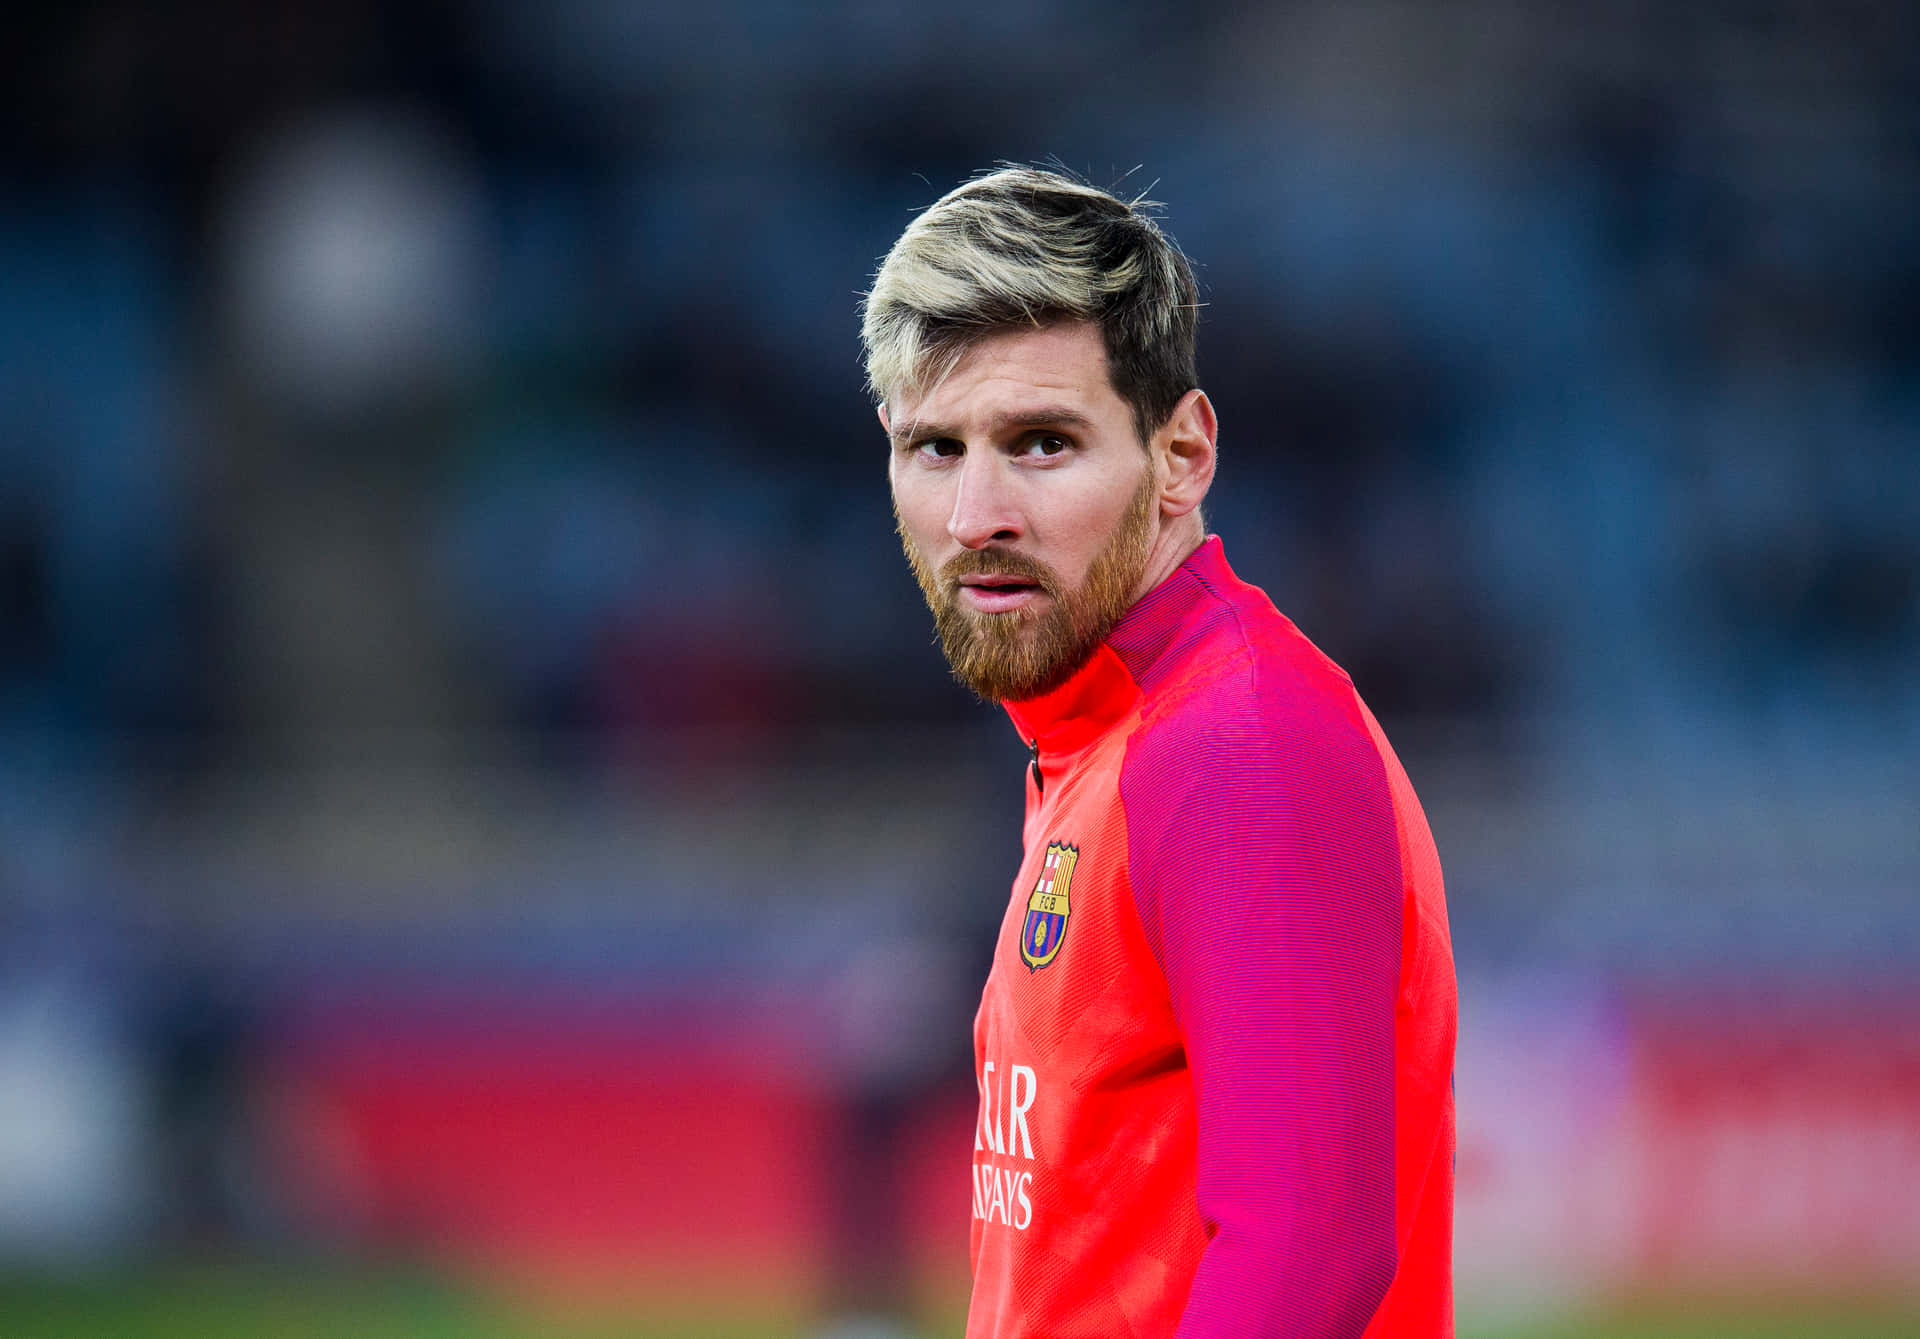 The undebatable best - Lionel Messi